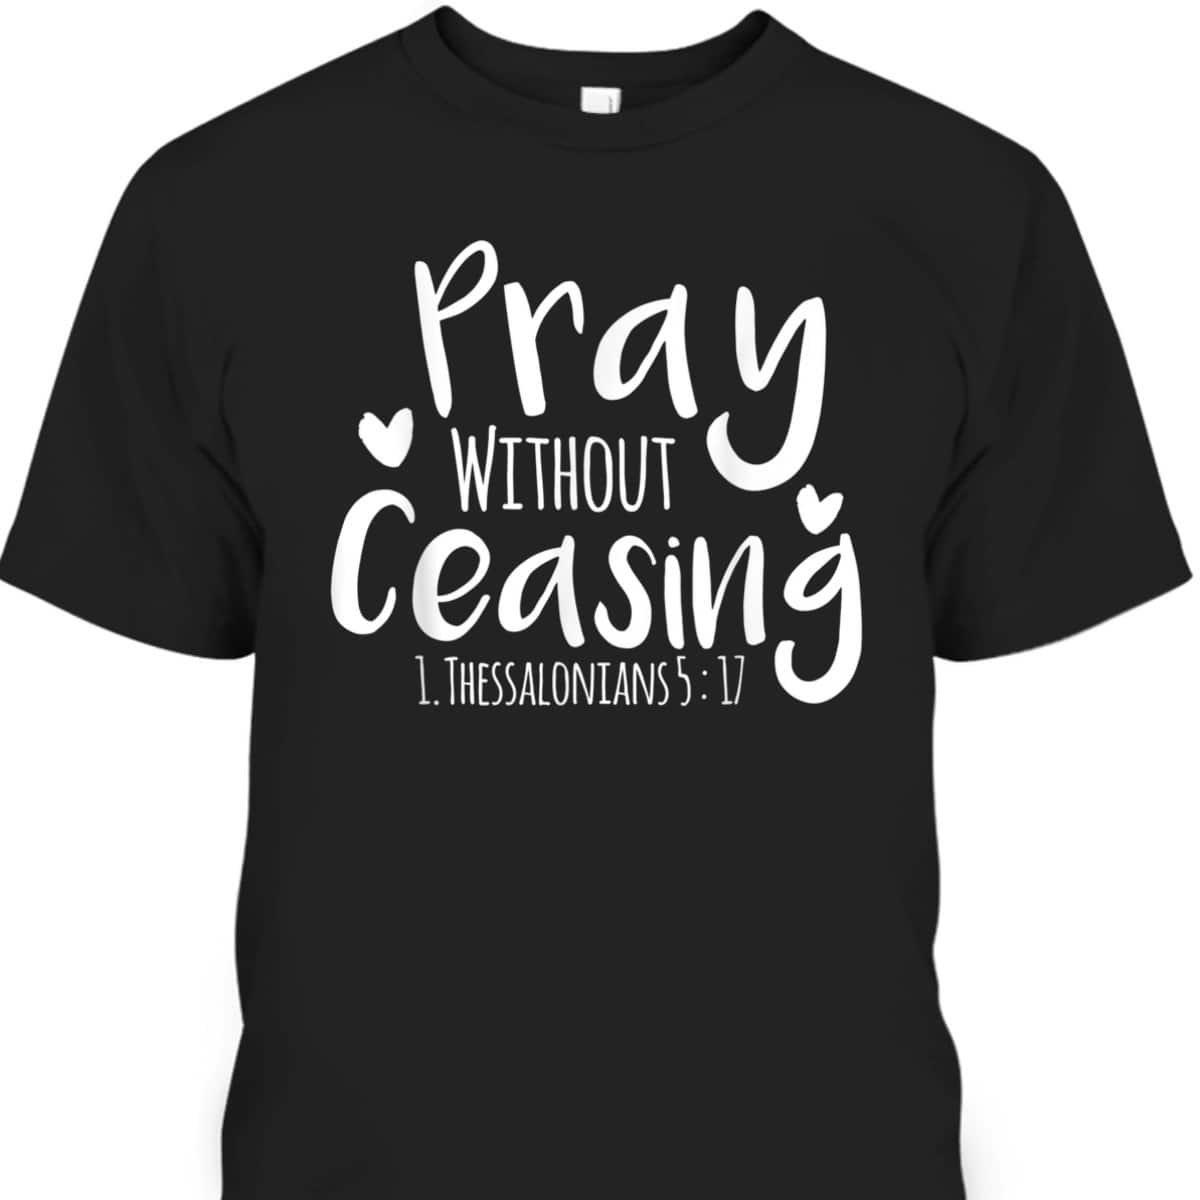 Pray Without Ceasing Bible Verse T-Shirt Christian Jesus God